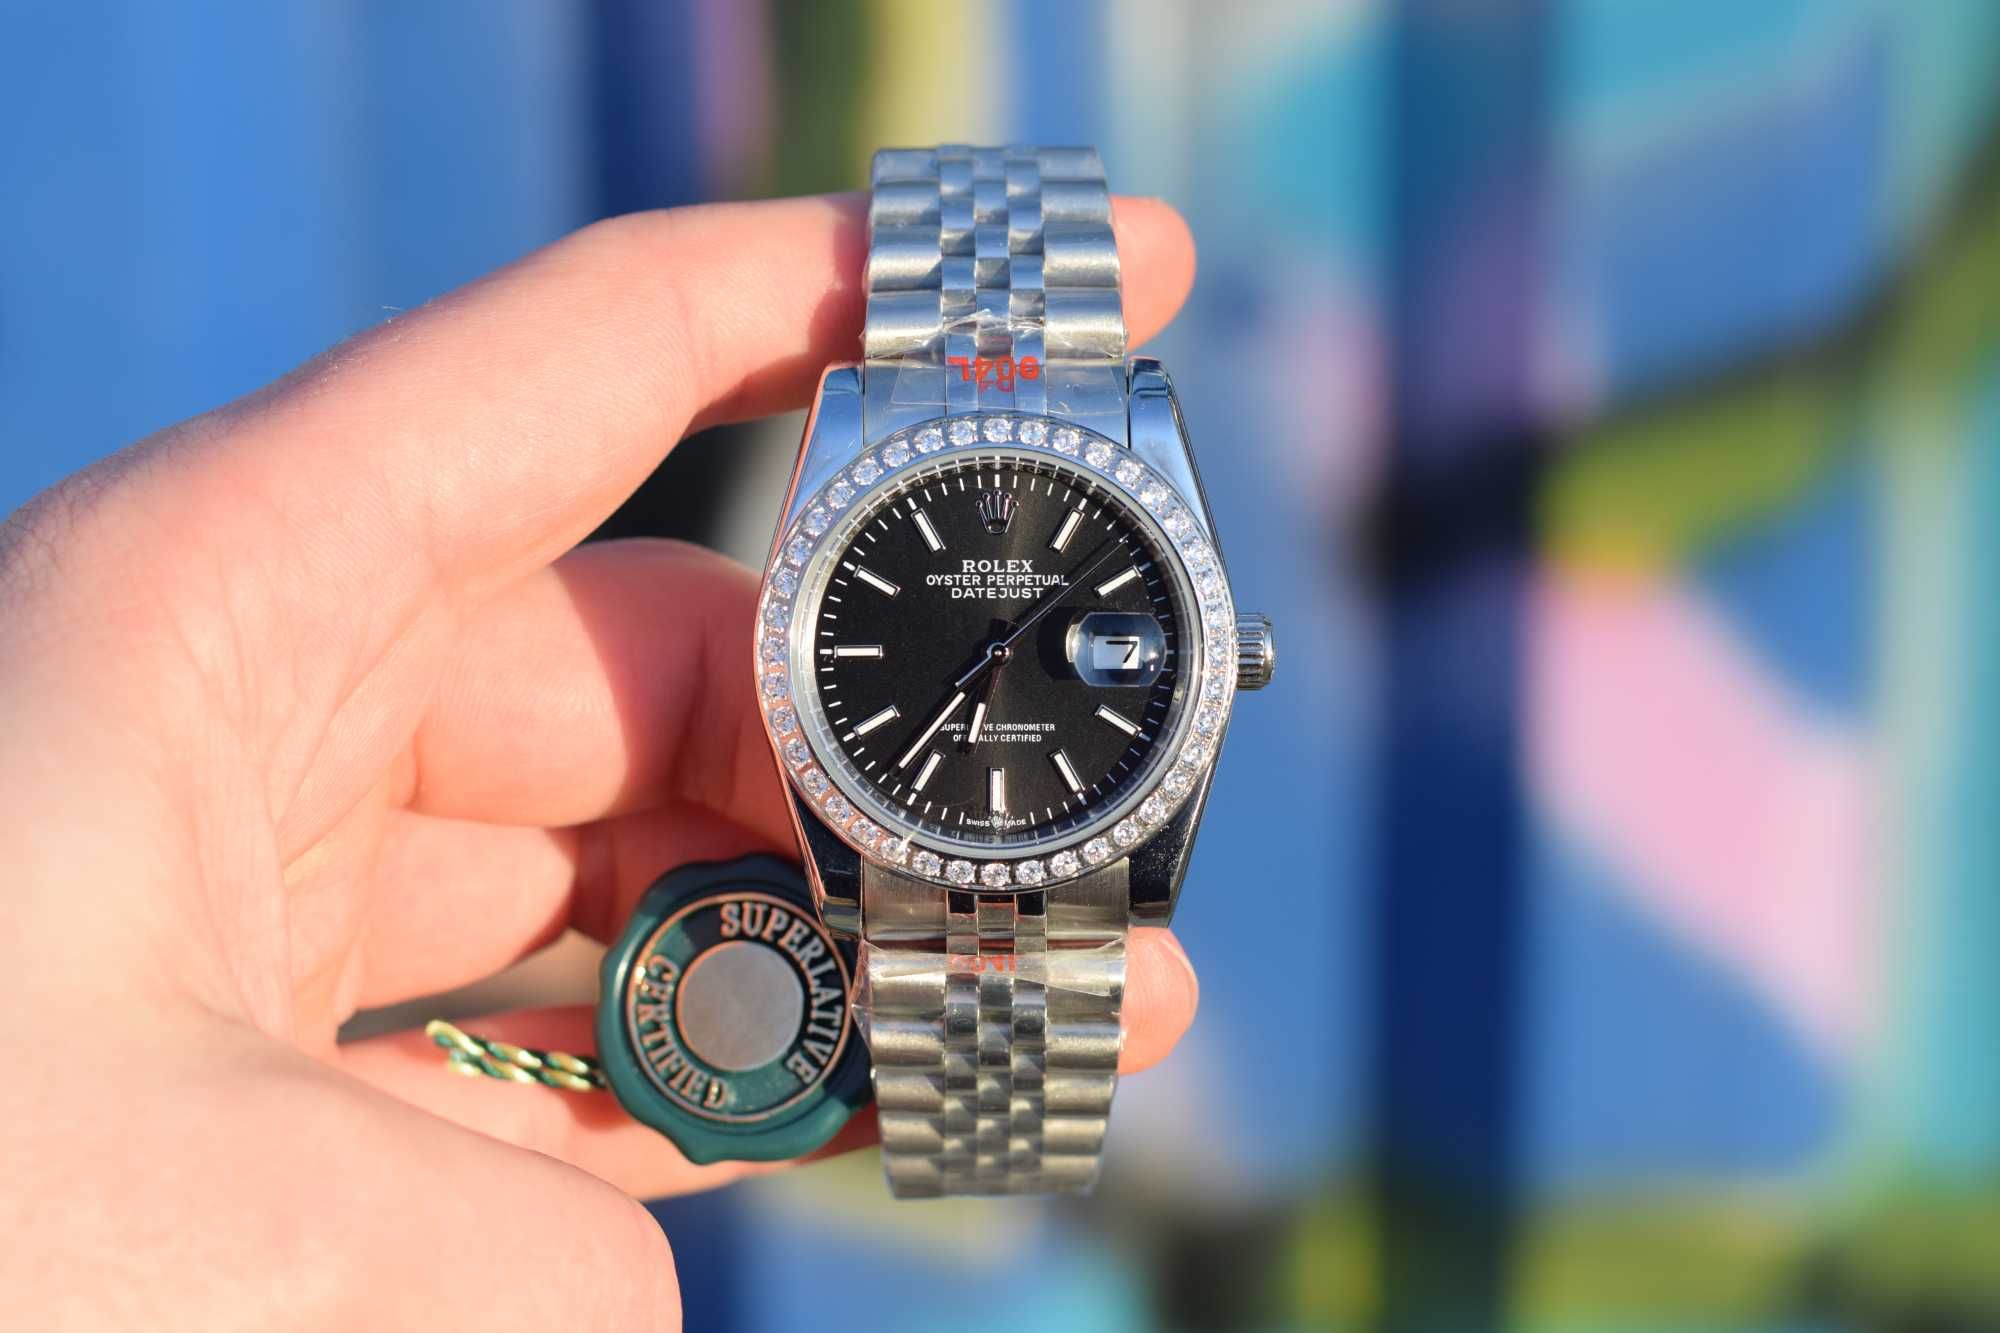 Женские часы Rolex Datejust 36 mm Silver-Black Ролекс